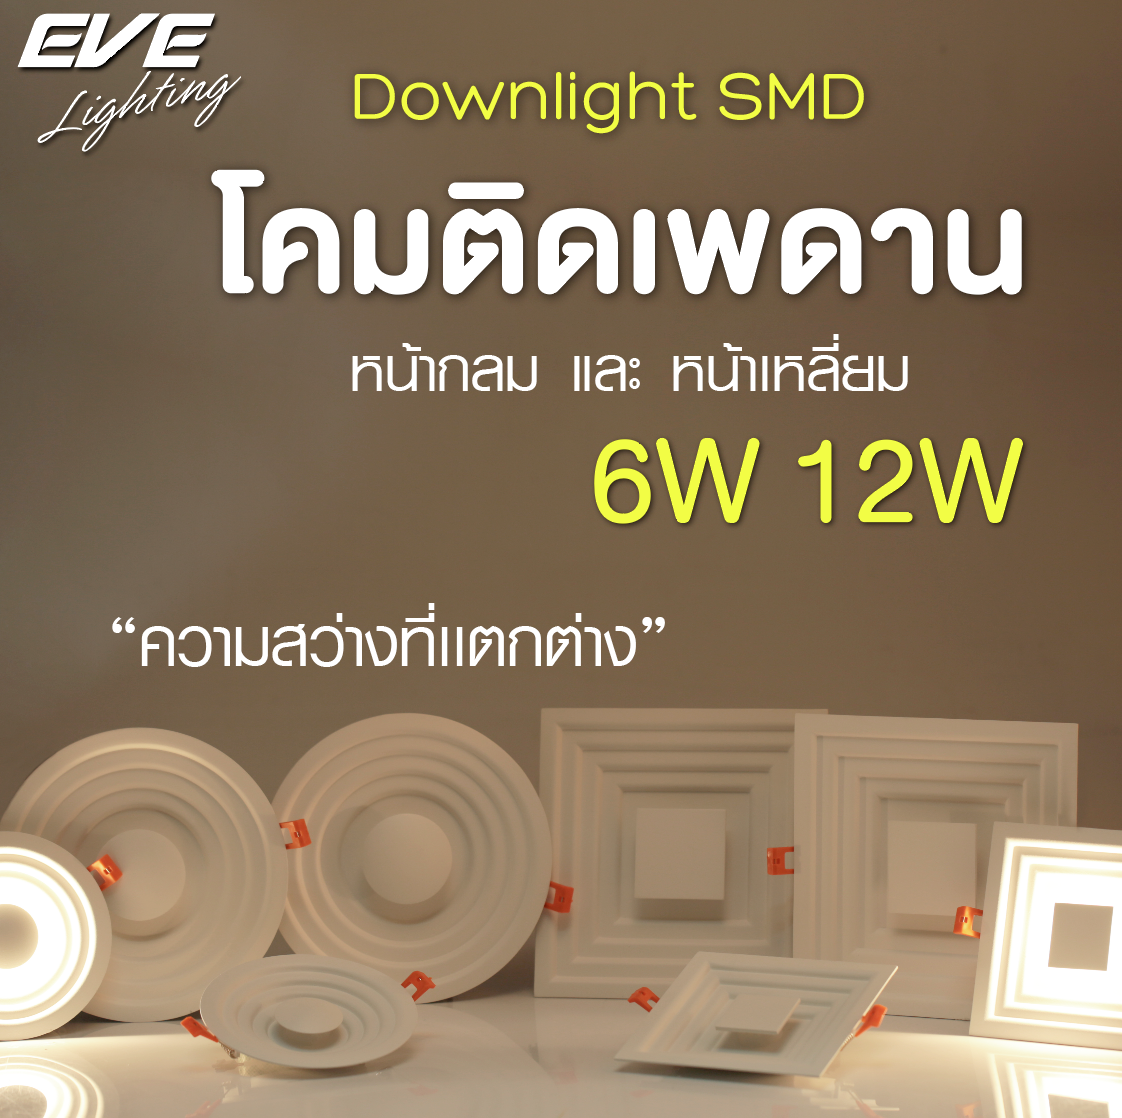 LED Downlight SMD Circle , Square  6,12w โคมดาวน์ไลท์แอลอีดี SMD-926212 แบบหน้ากลม และหน้าเหลี่ยม ลายสวยงาม ขนาด 6 และ 12วัตต์ มีให้เลือกทั้งแสงขาวเดย์ไลท์  และแสงเหลืองวอร์มไวท์